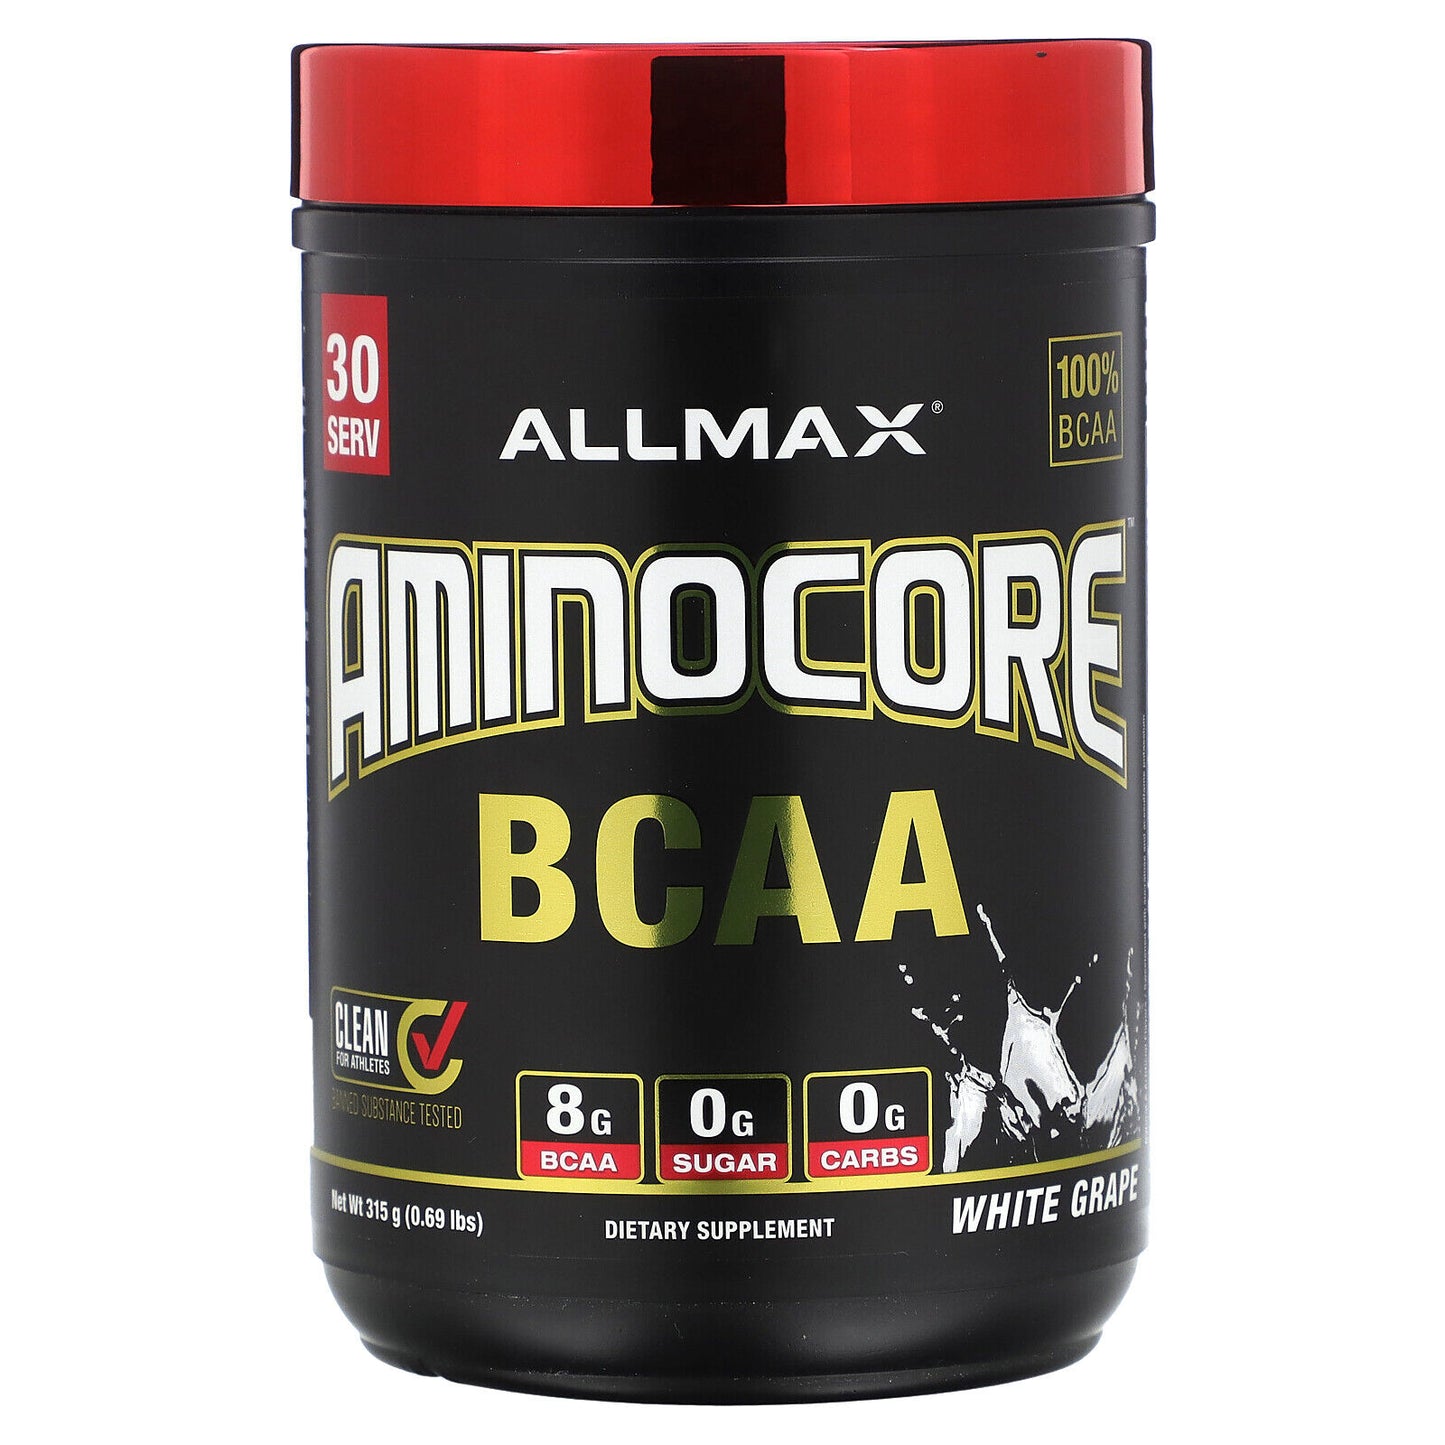 Allmax aminocore bcaa